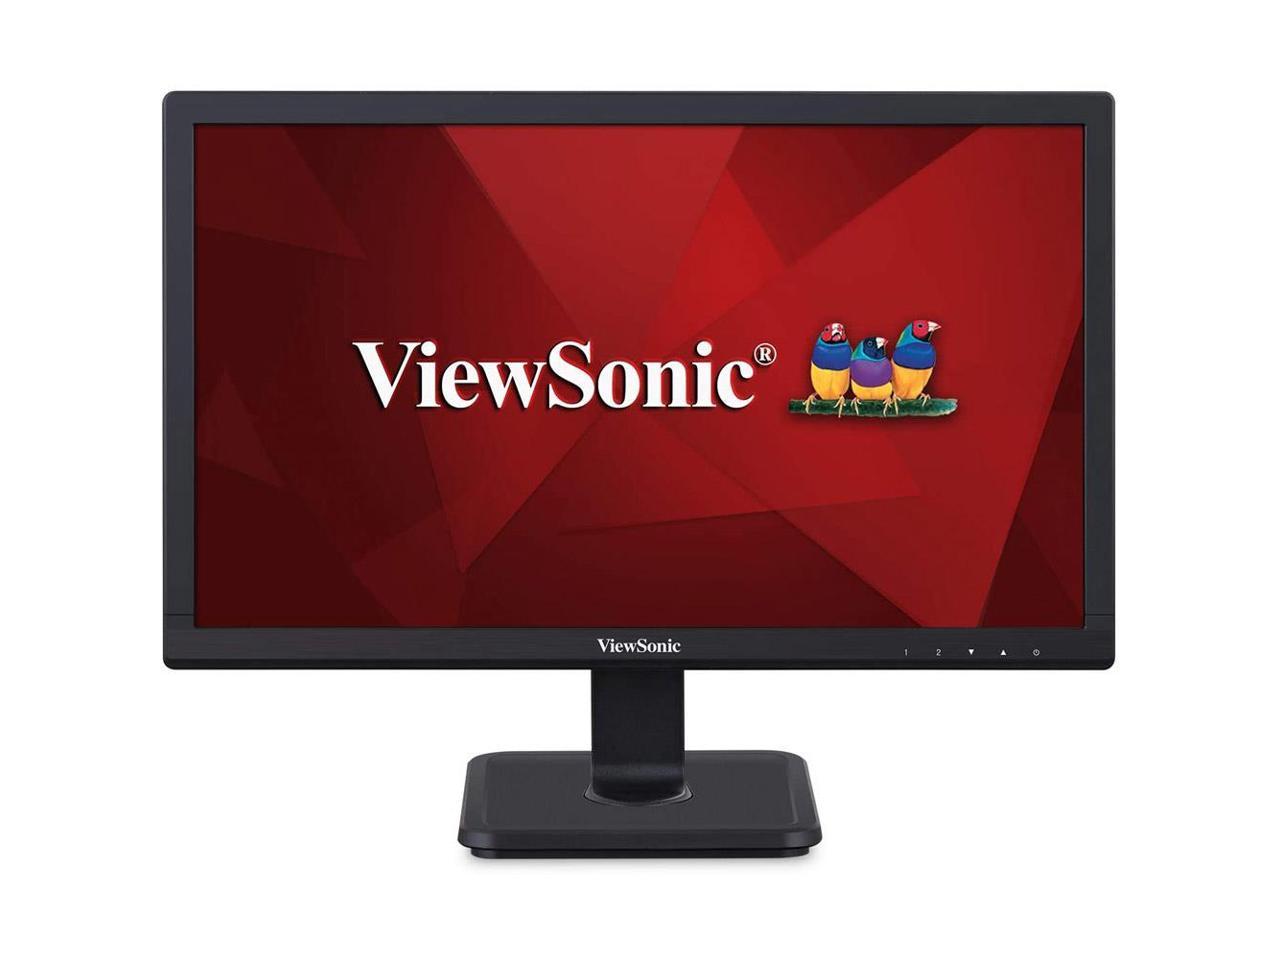 ViewSonic VA1901-A 19" (Actual size 18.5") 1366 x 768 Resolution 5ms (GTG) VGA Anti-Glare Backlit LED LCD Monitor